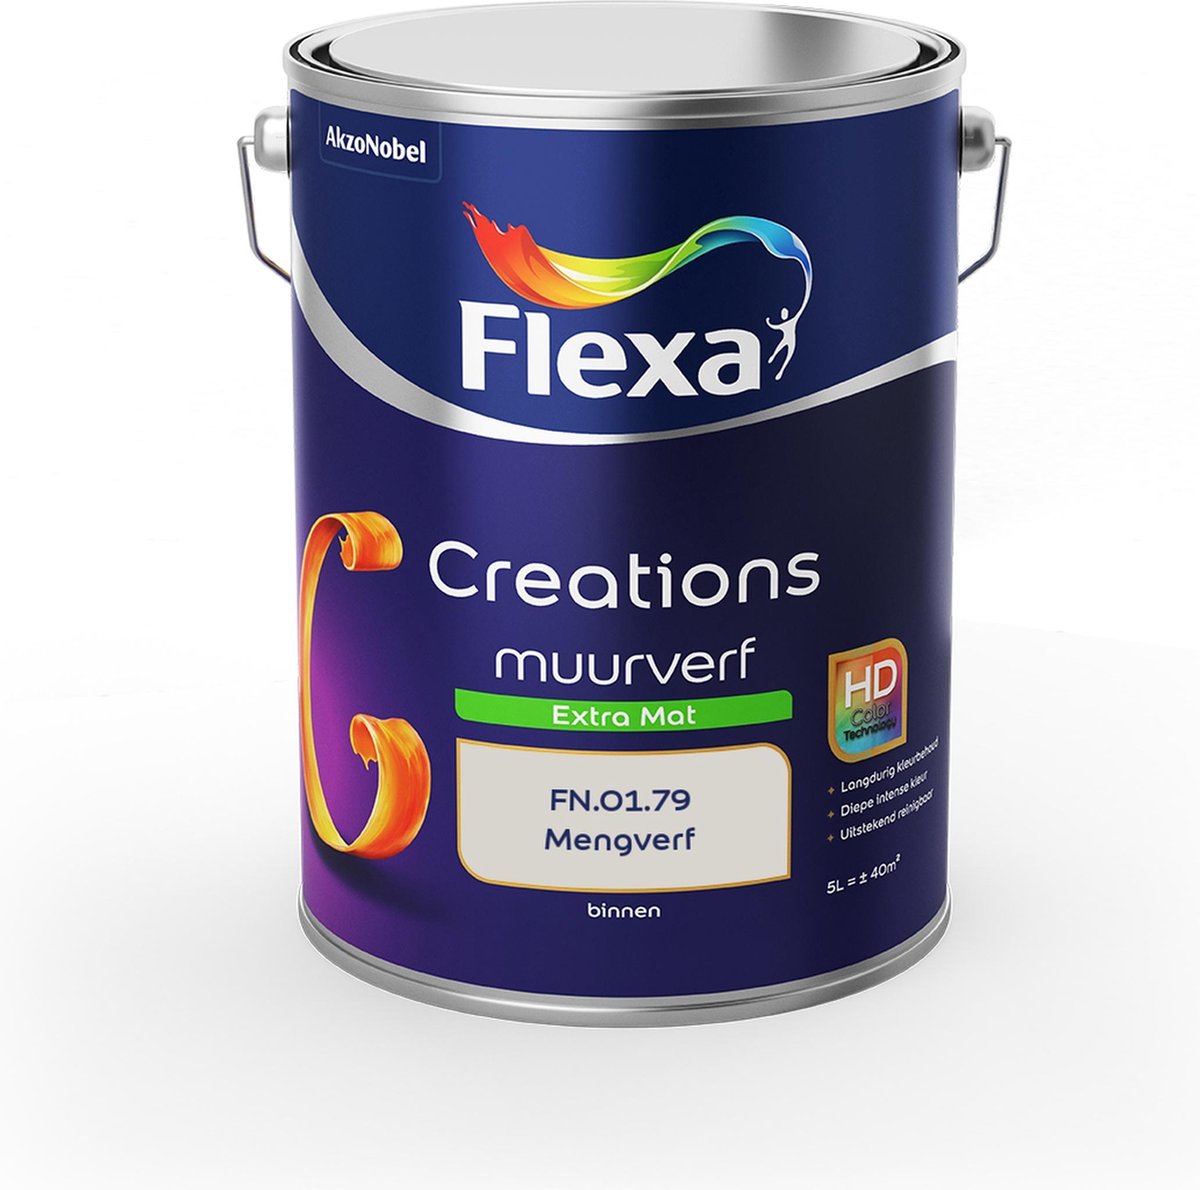 Flexa Creations Muurverf - Extra Mat - Colorfutures 2019 - FN.01.79 - 5 liter